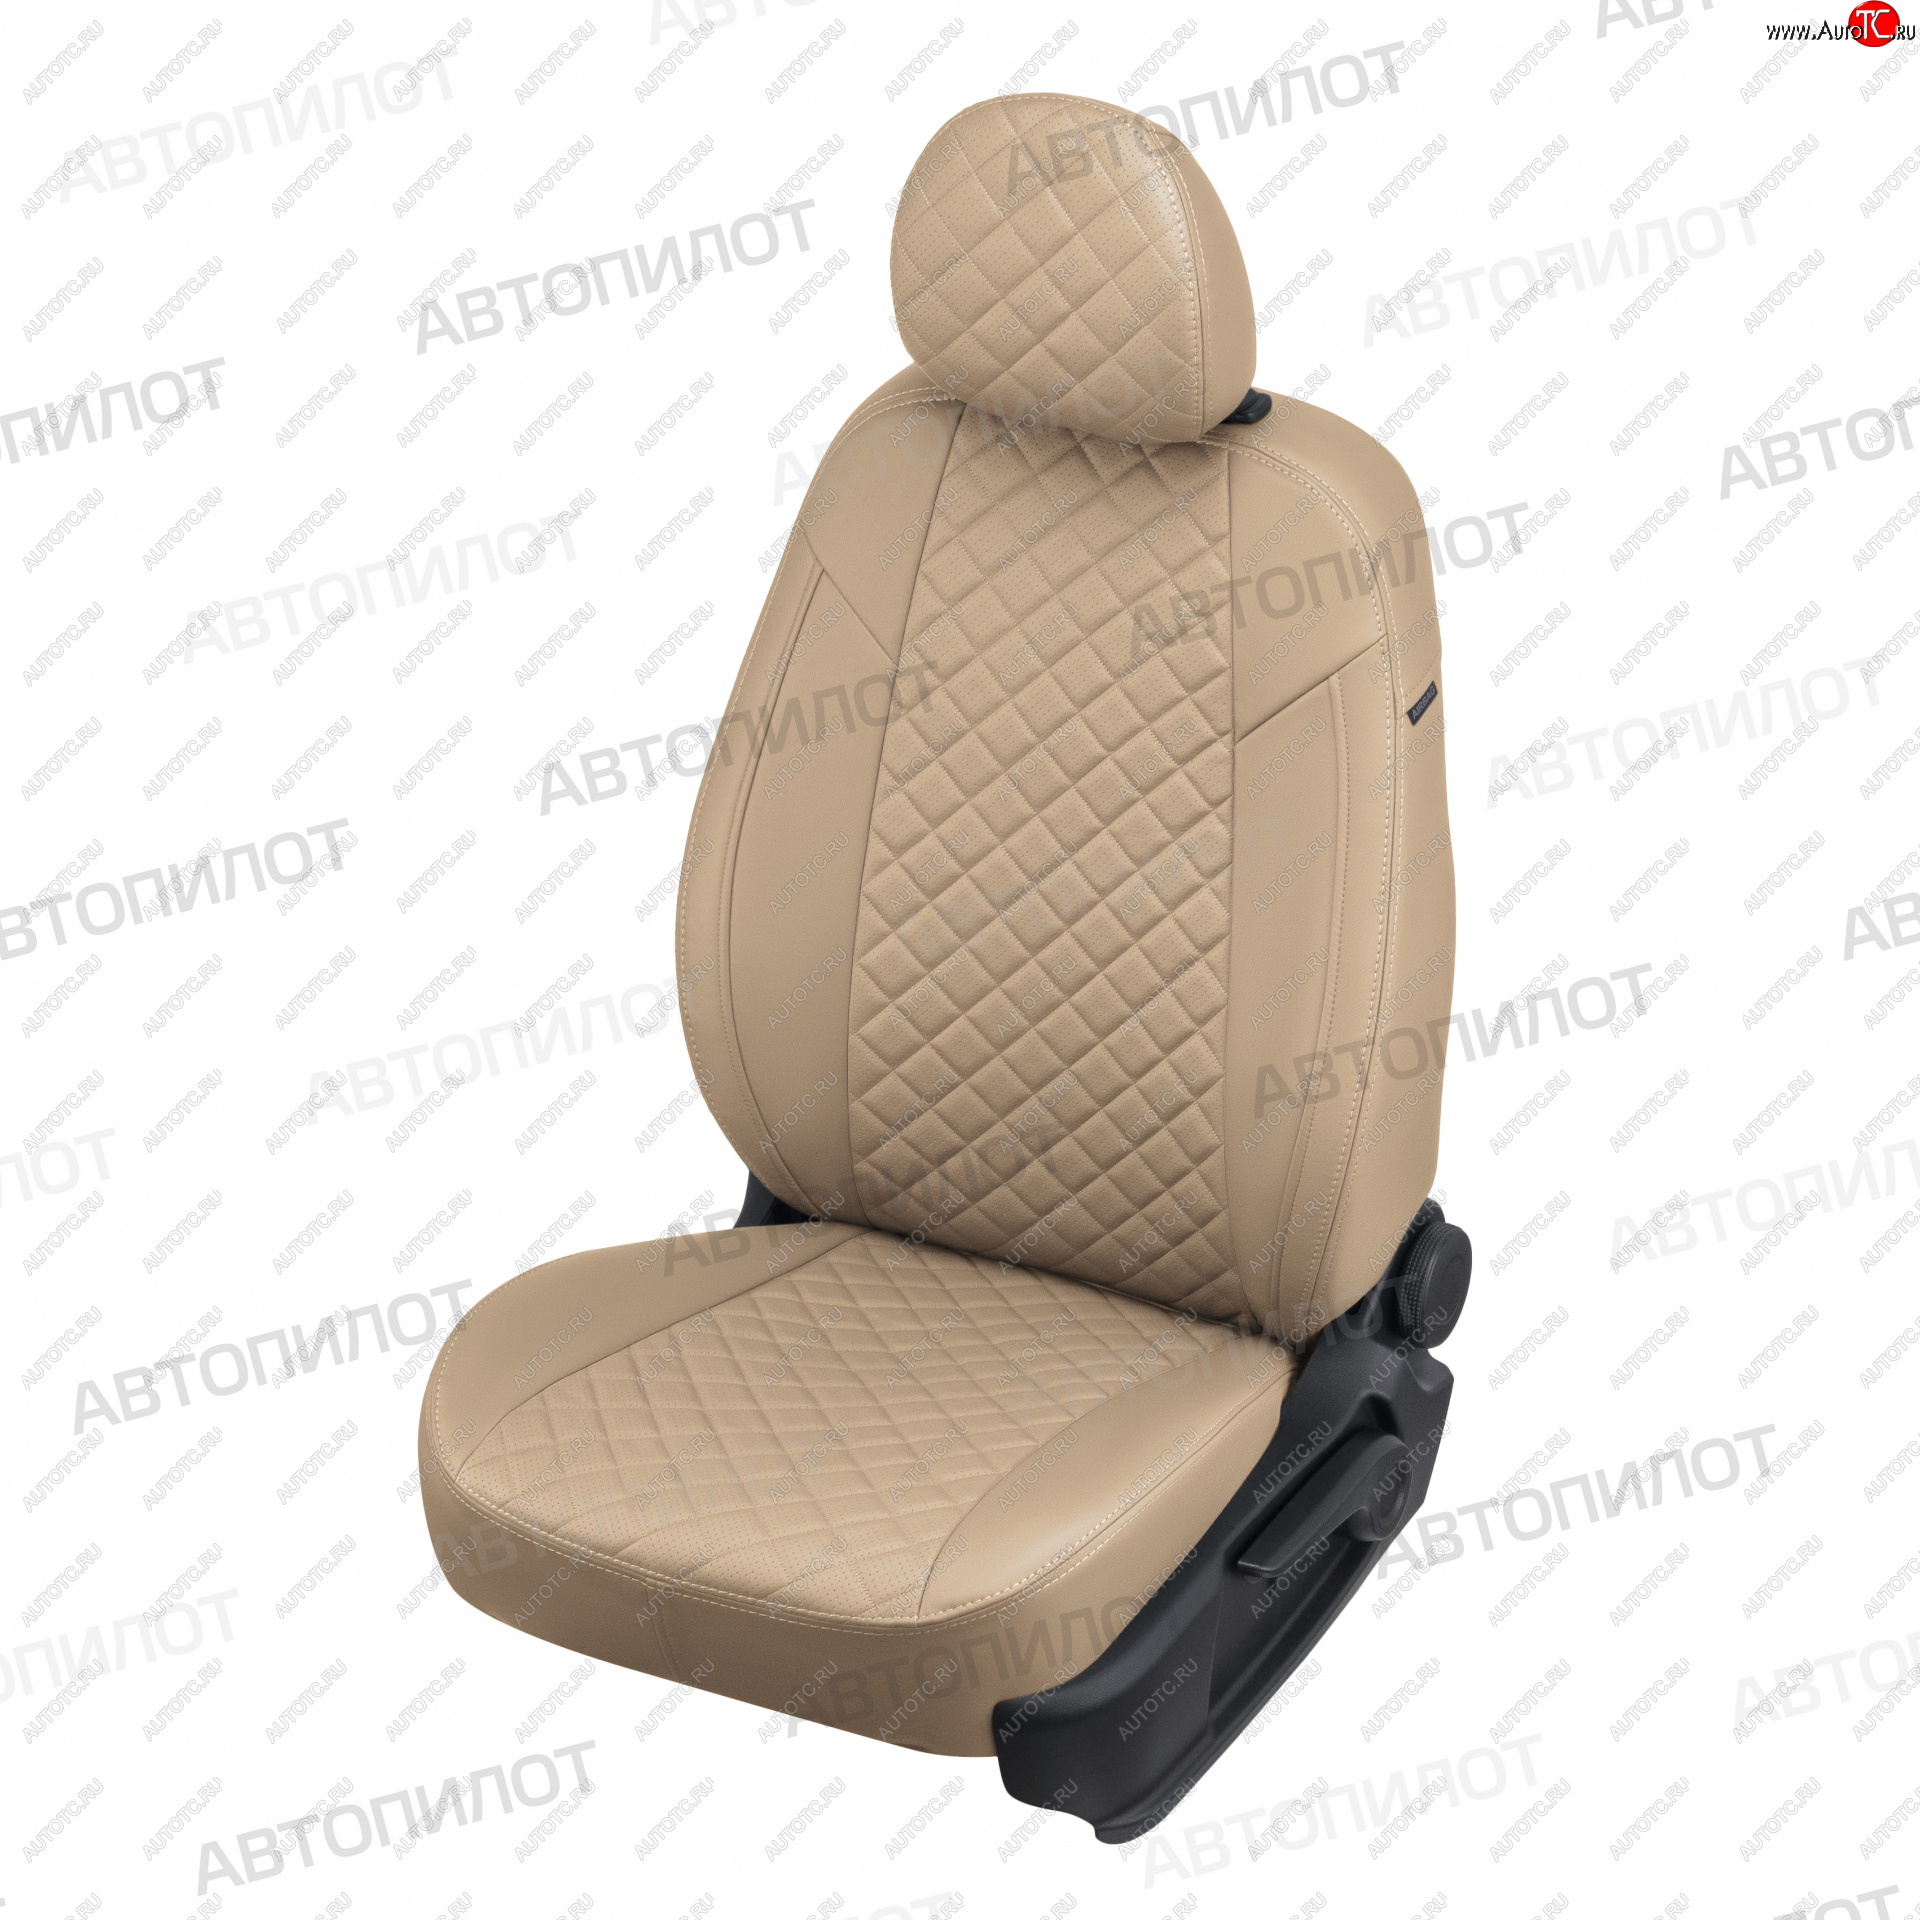 21 599 р. Чехлы сидений (9 мест, экокожа) Автопилот Ромб  Ford Transit  3 (2006-2014) (темно-бежевый)